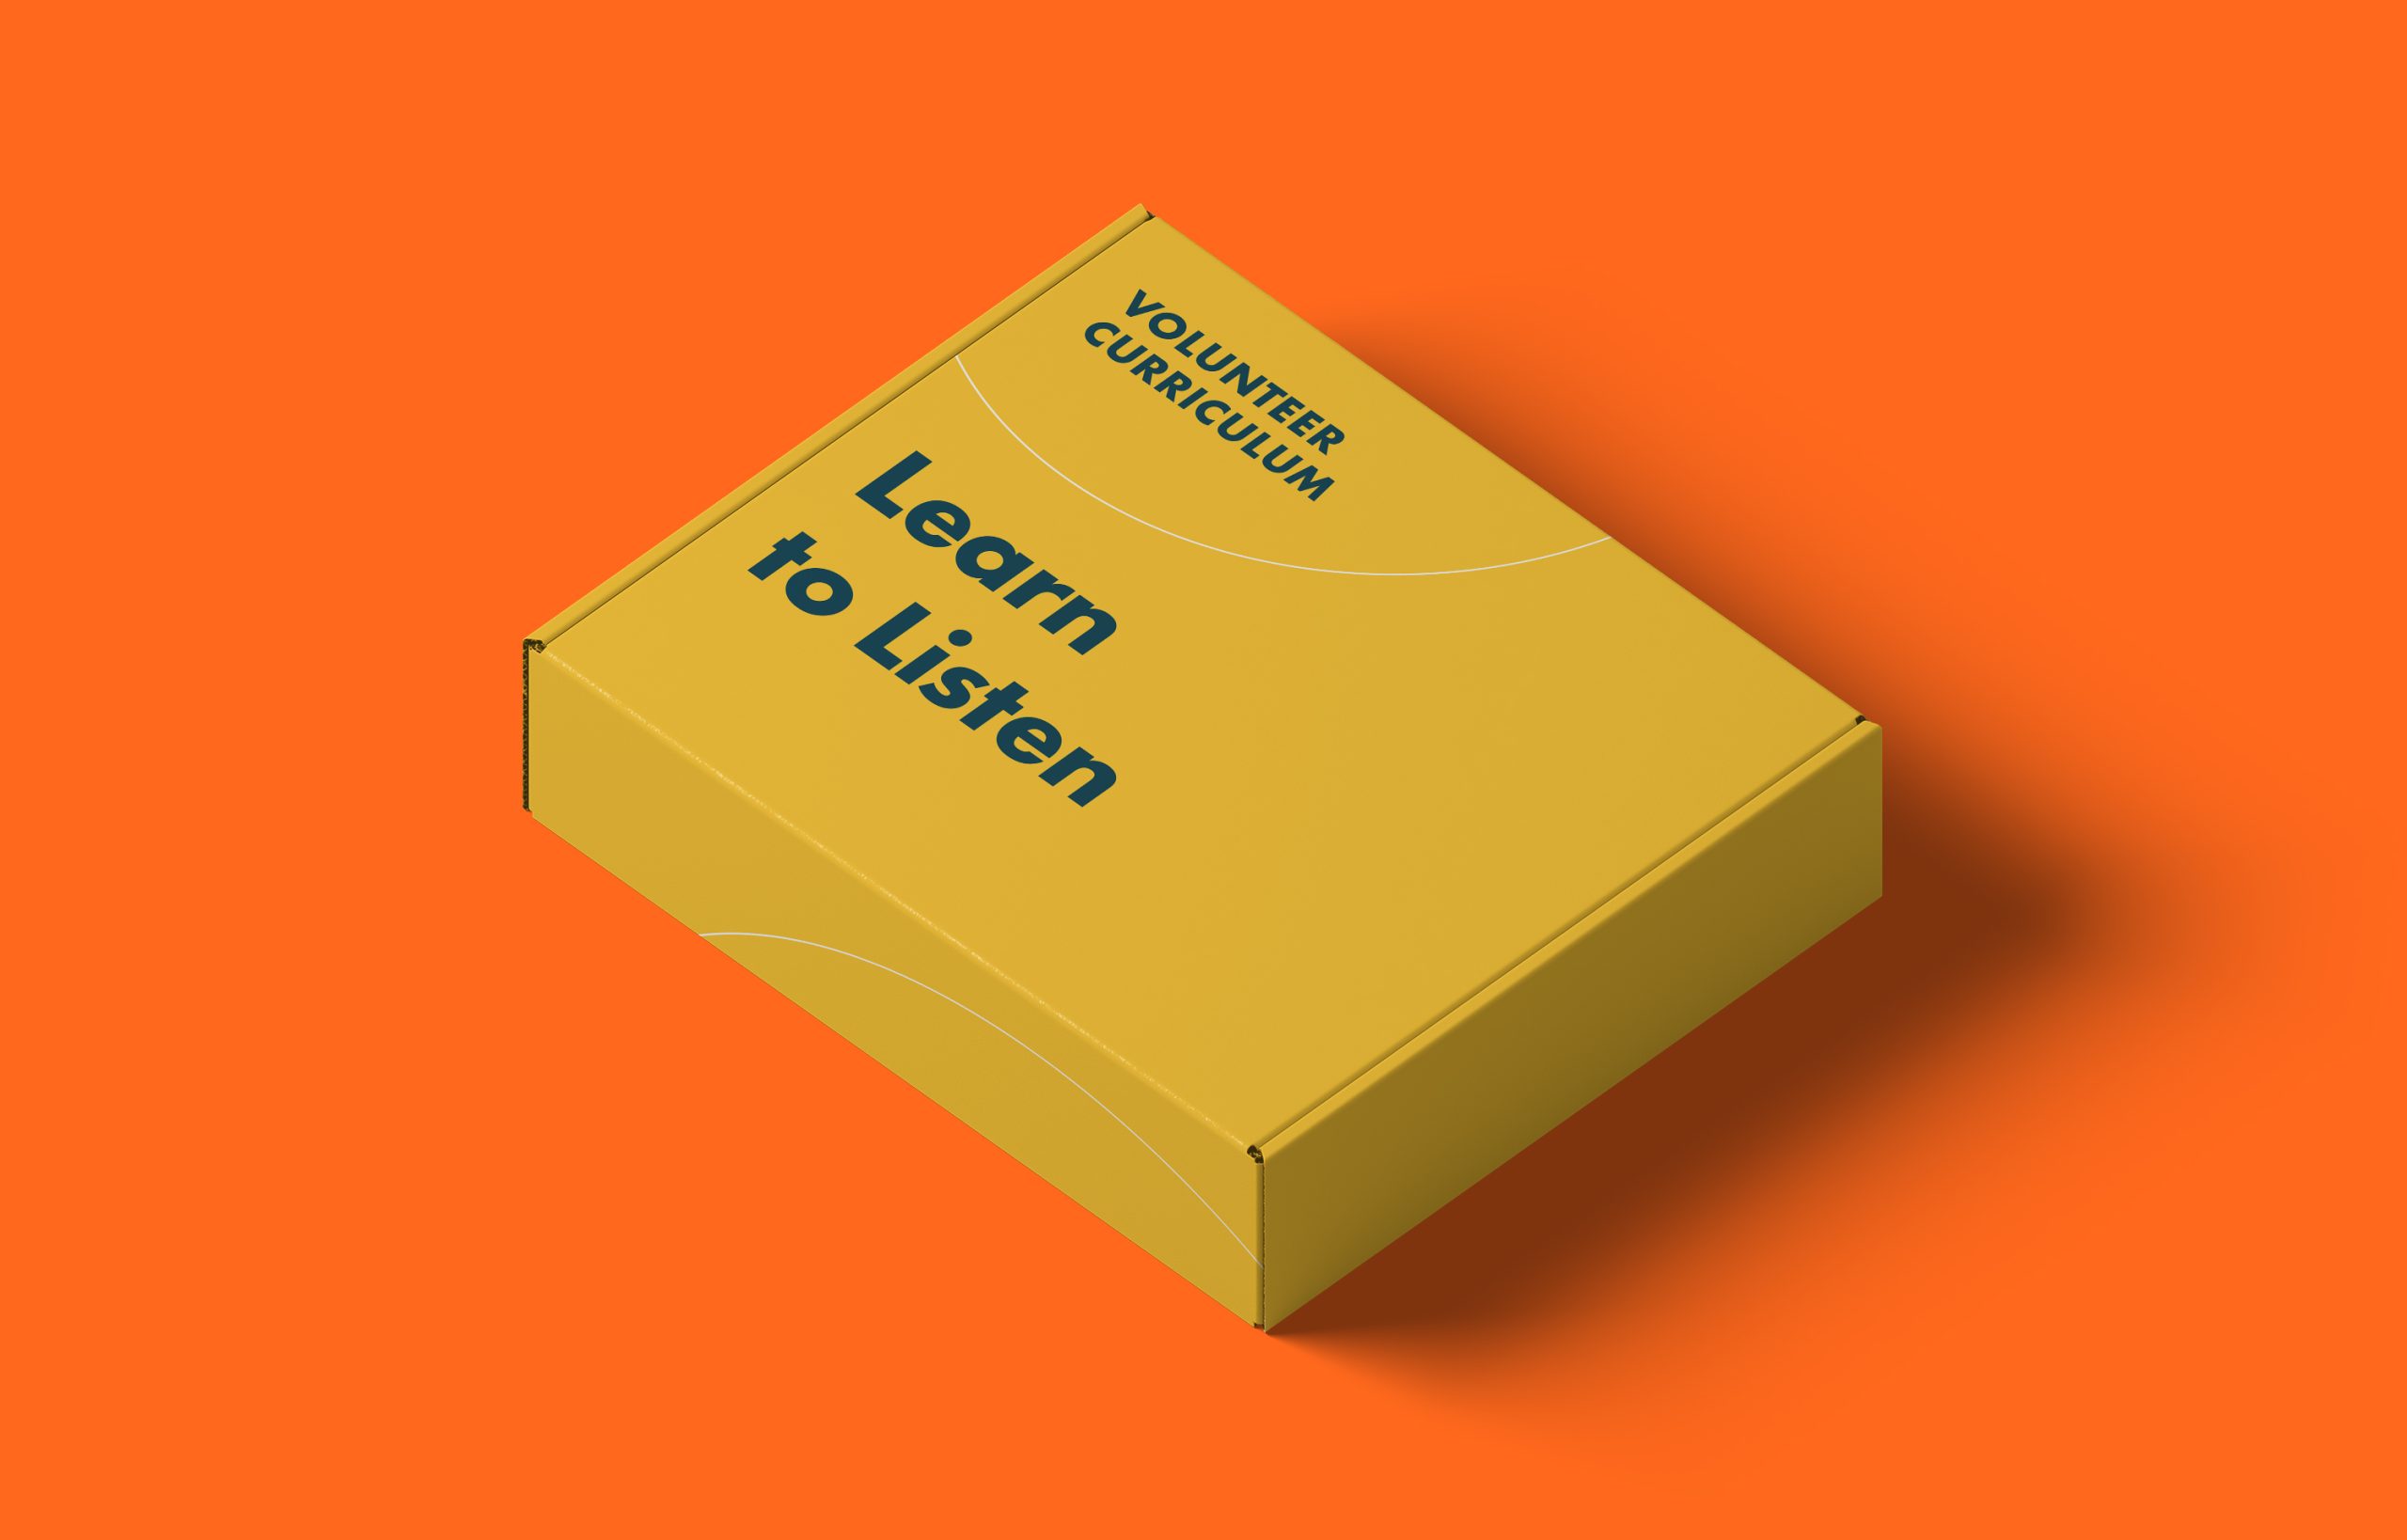 Learn To Listen – Volunteer Training Kit